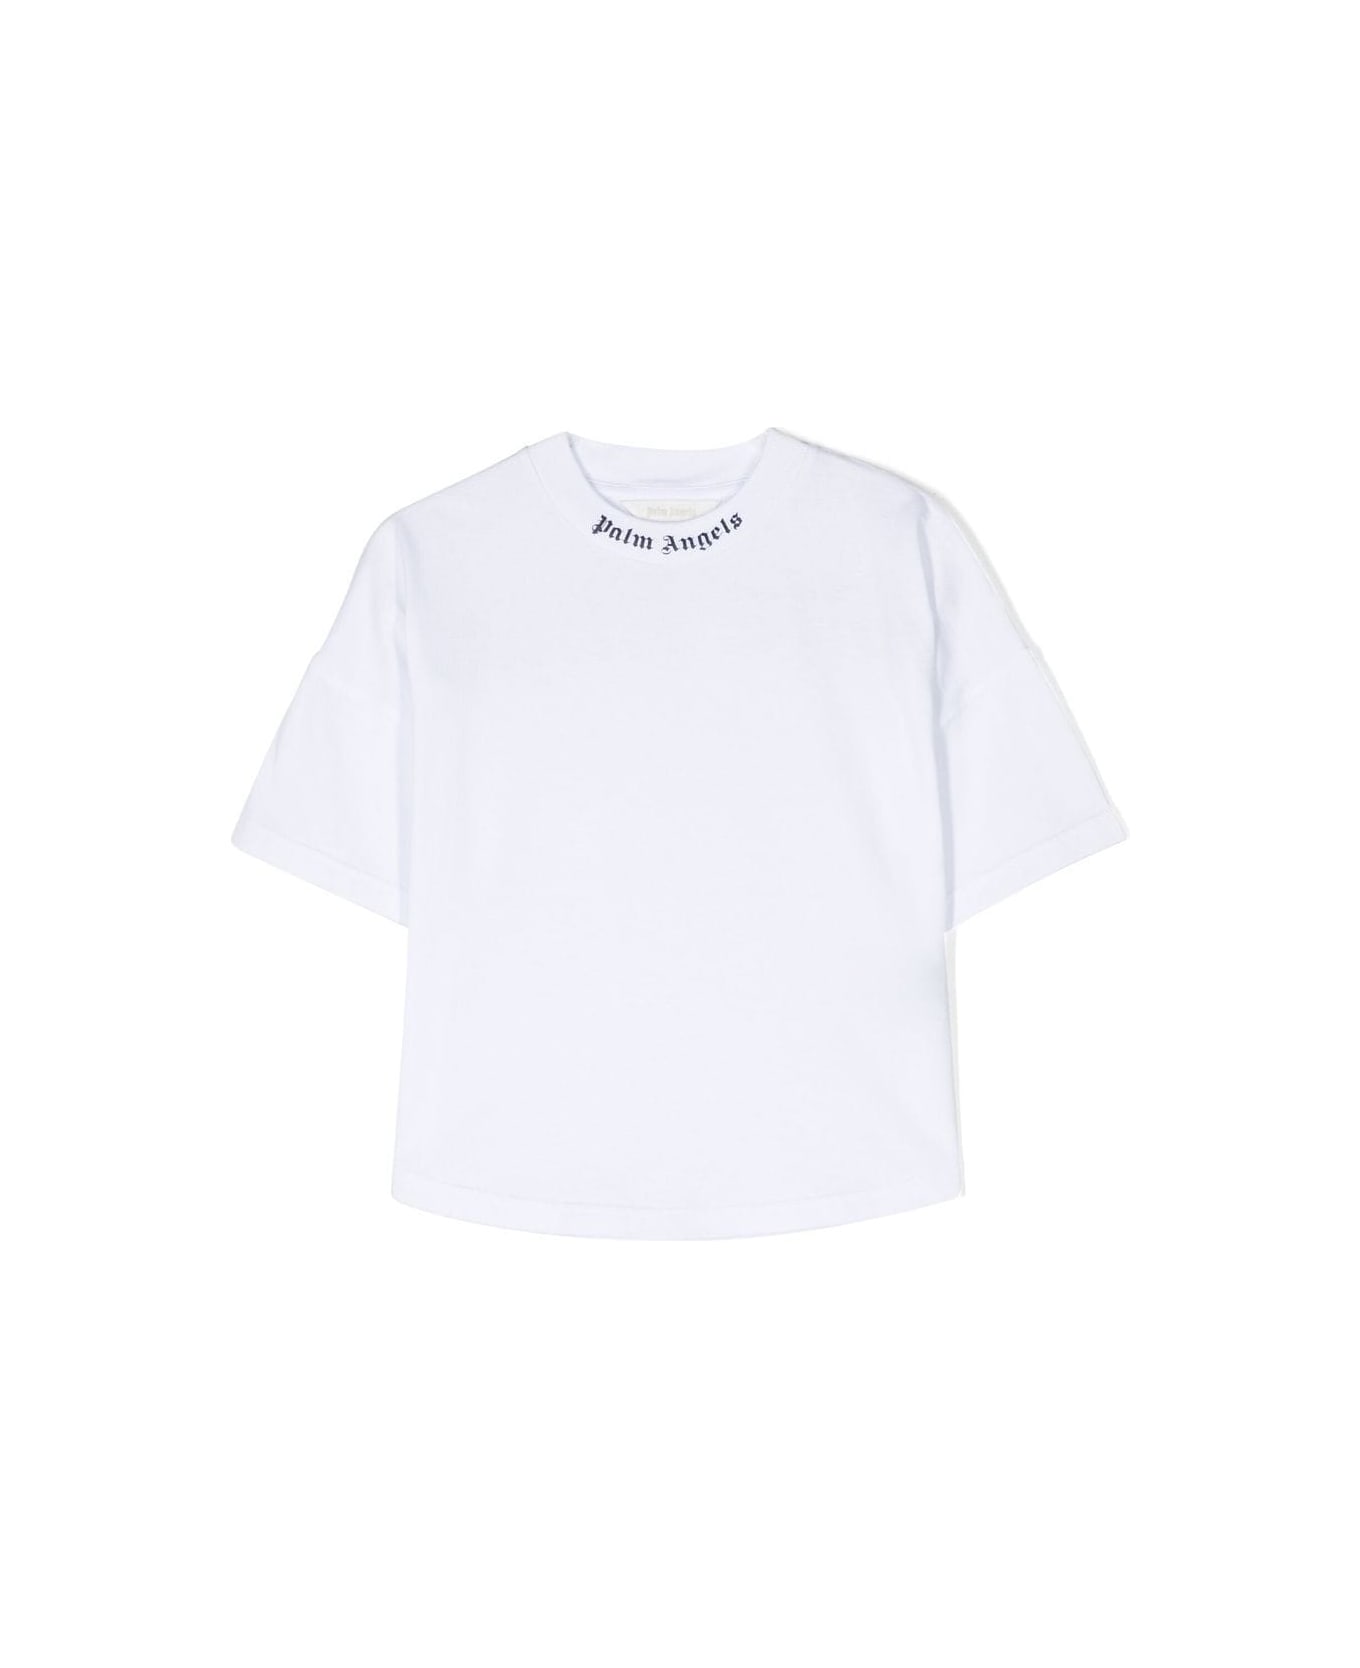 Palm Angels Classic Overlogo Short Sleeves T-shirt - White Navy